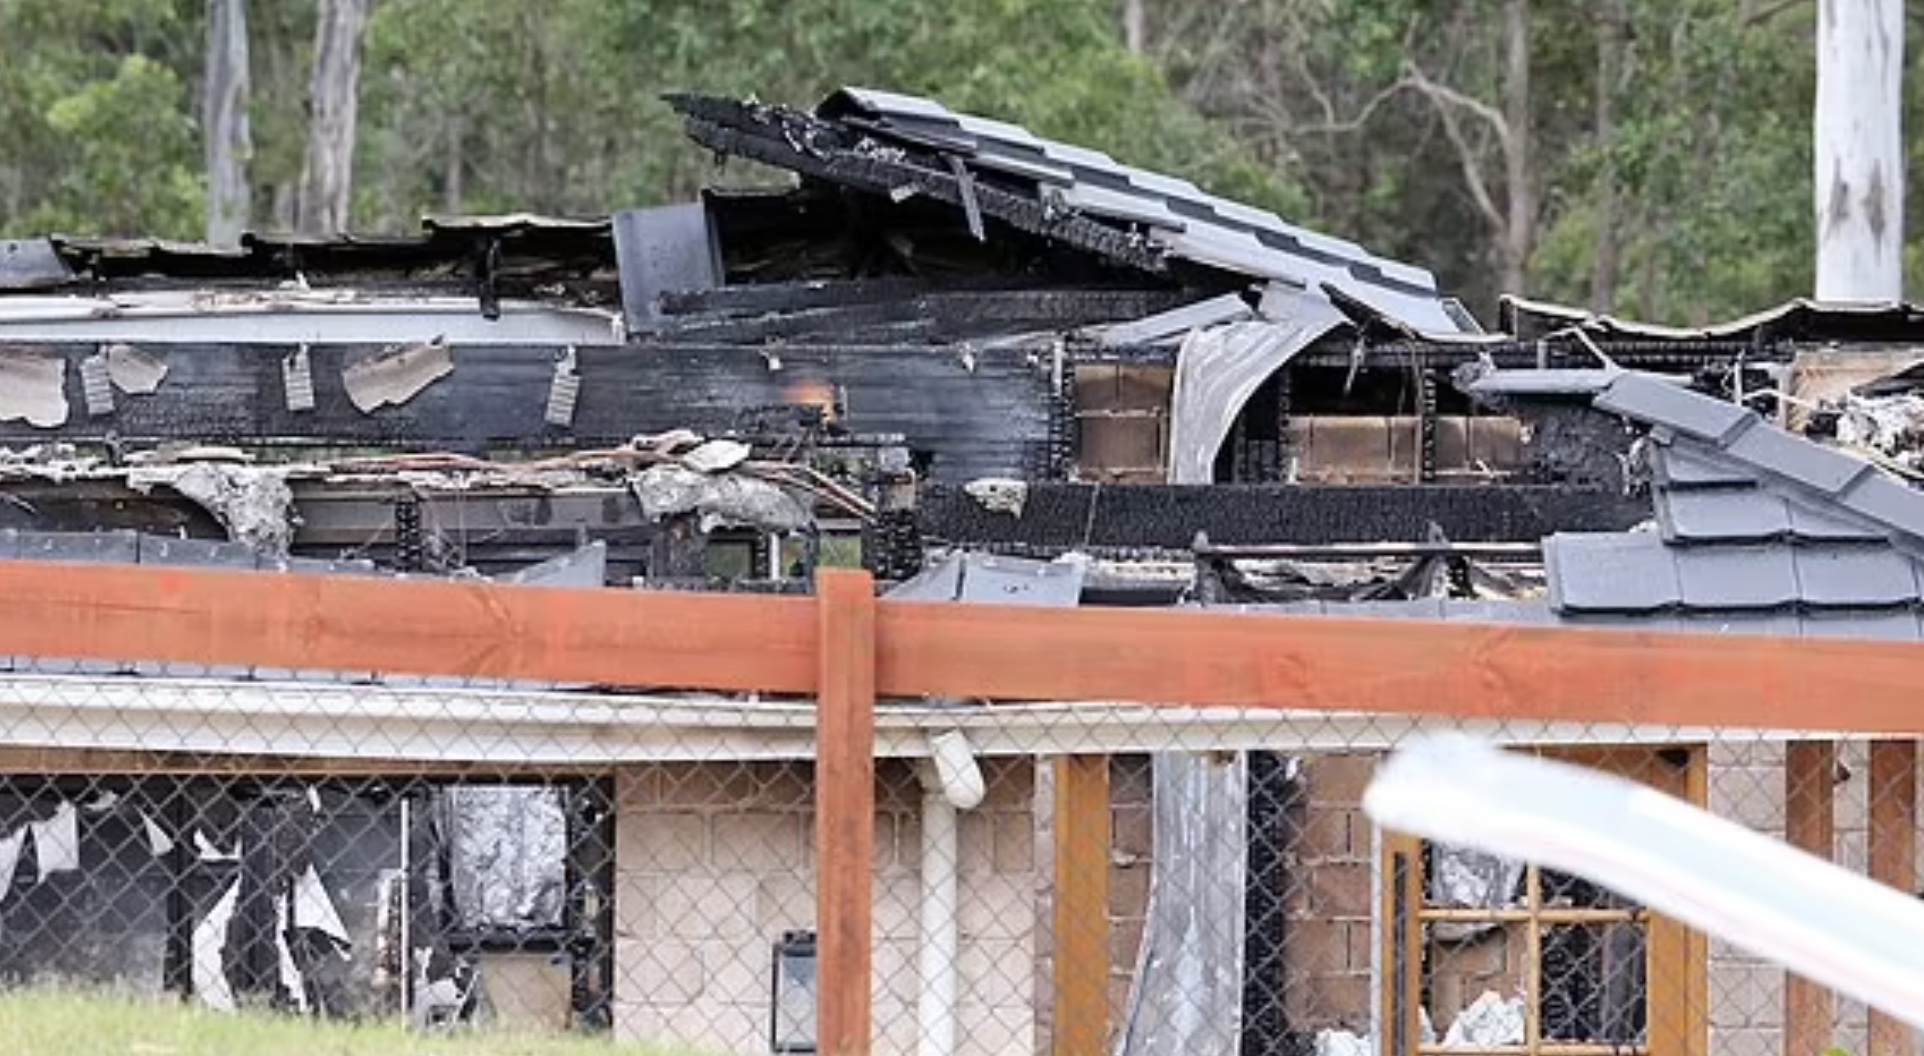 Stanley Obi's burned home in New Beith Brisbane Australia